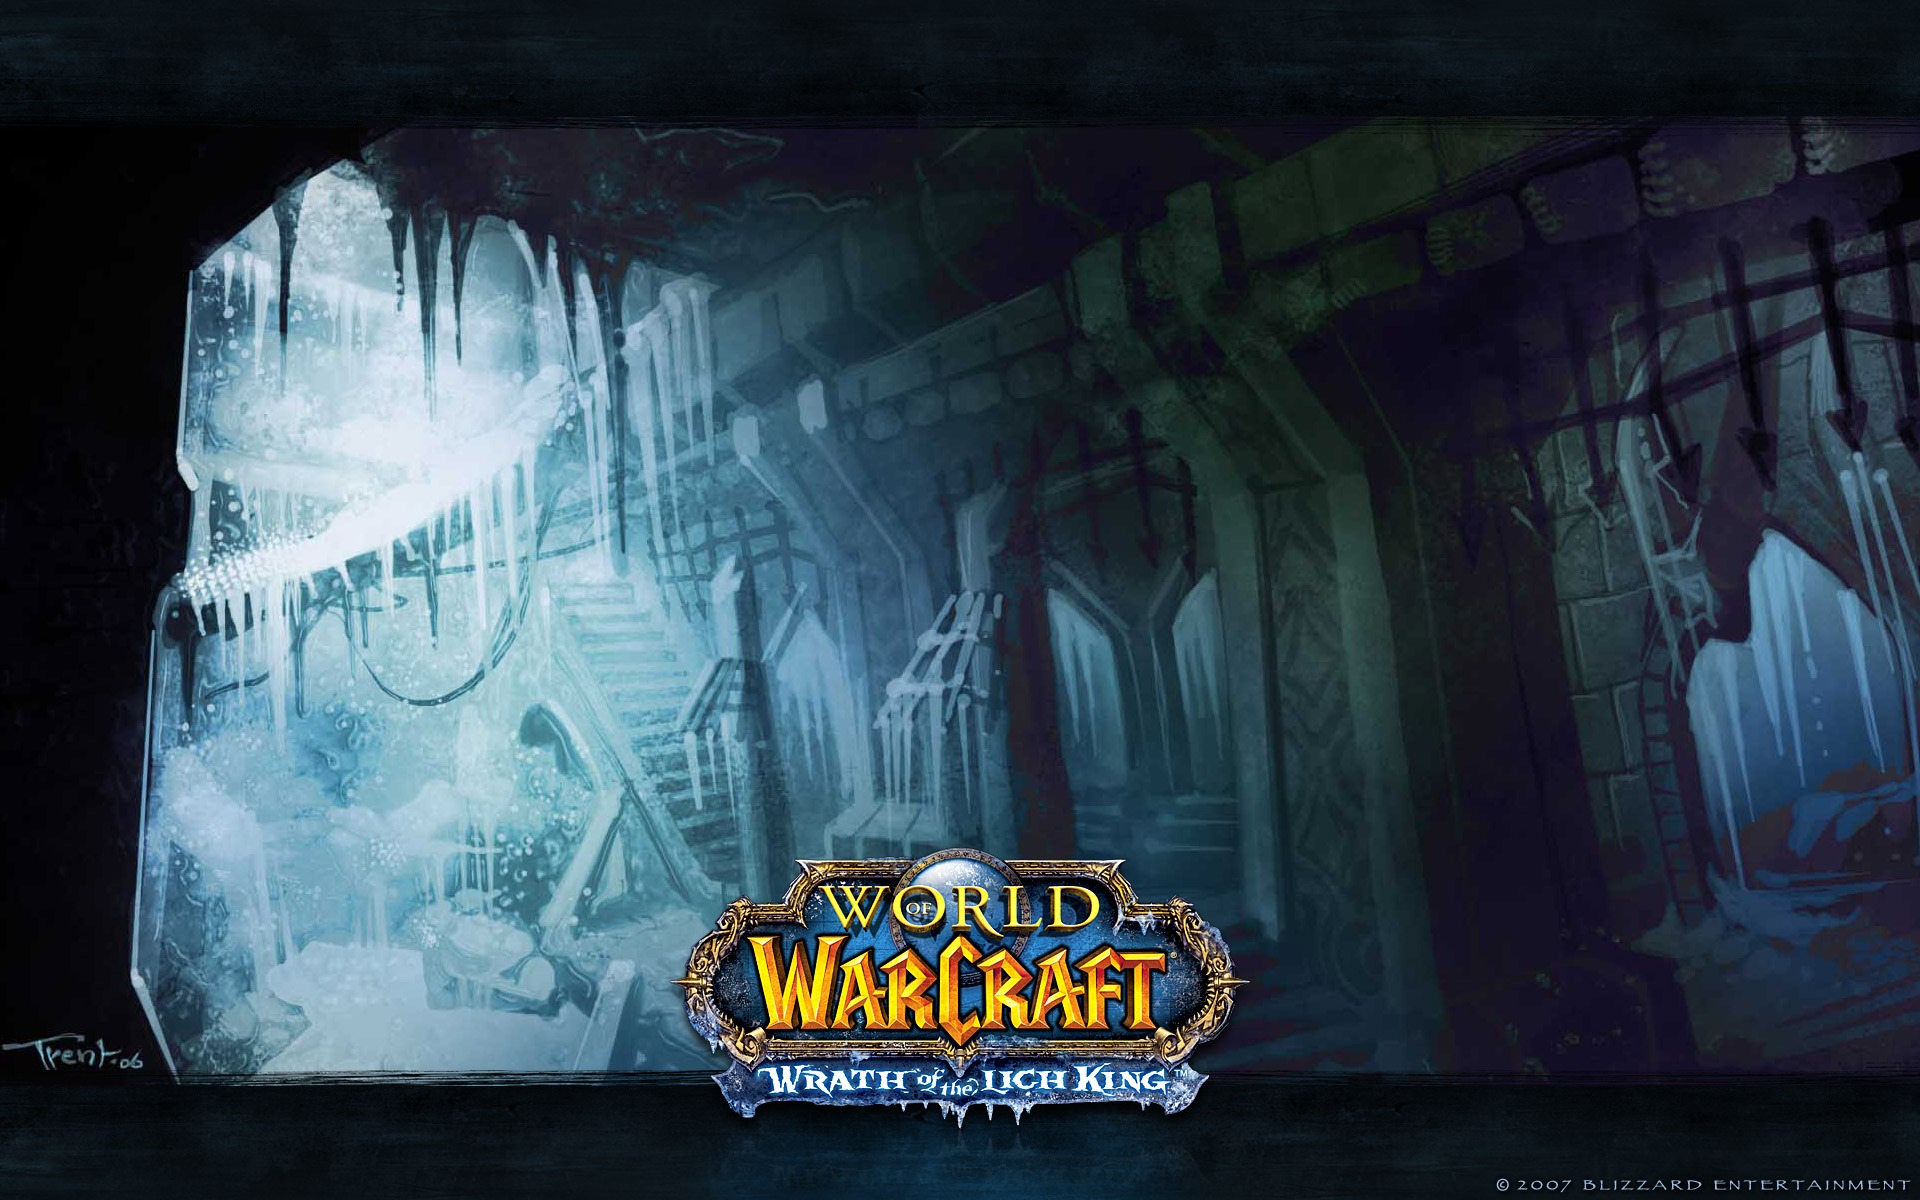 World of Warcraft 魔兽世界高清壁纸(二)4 - 1920x1200